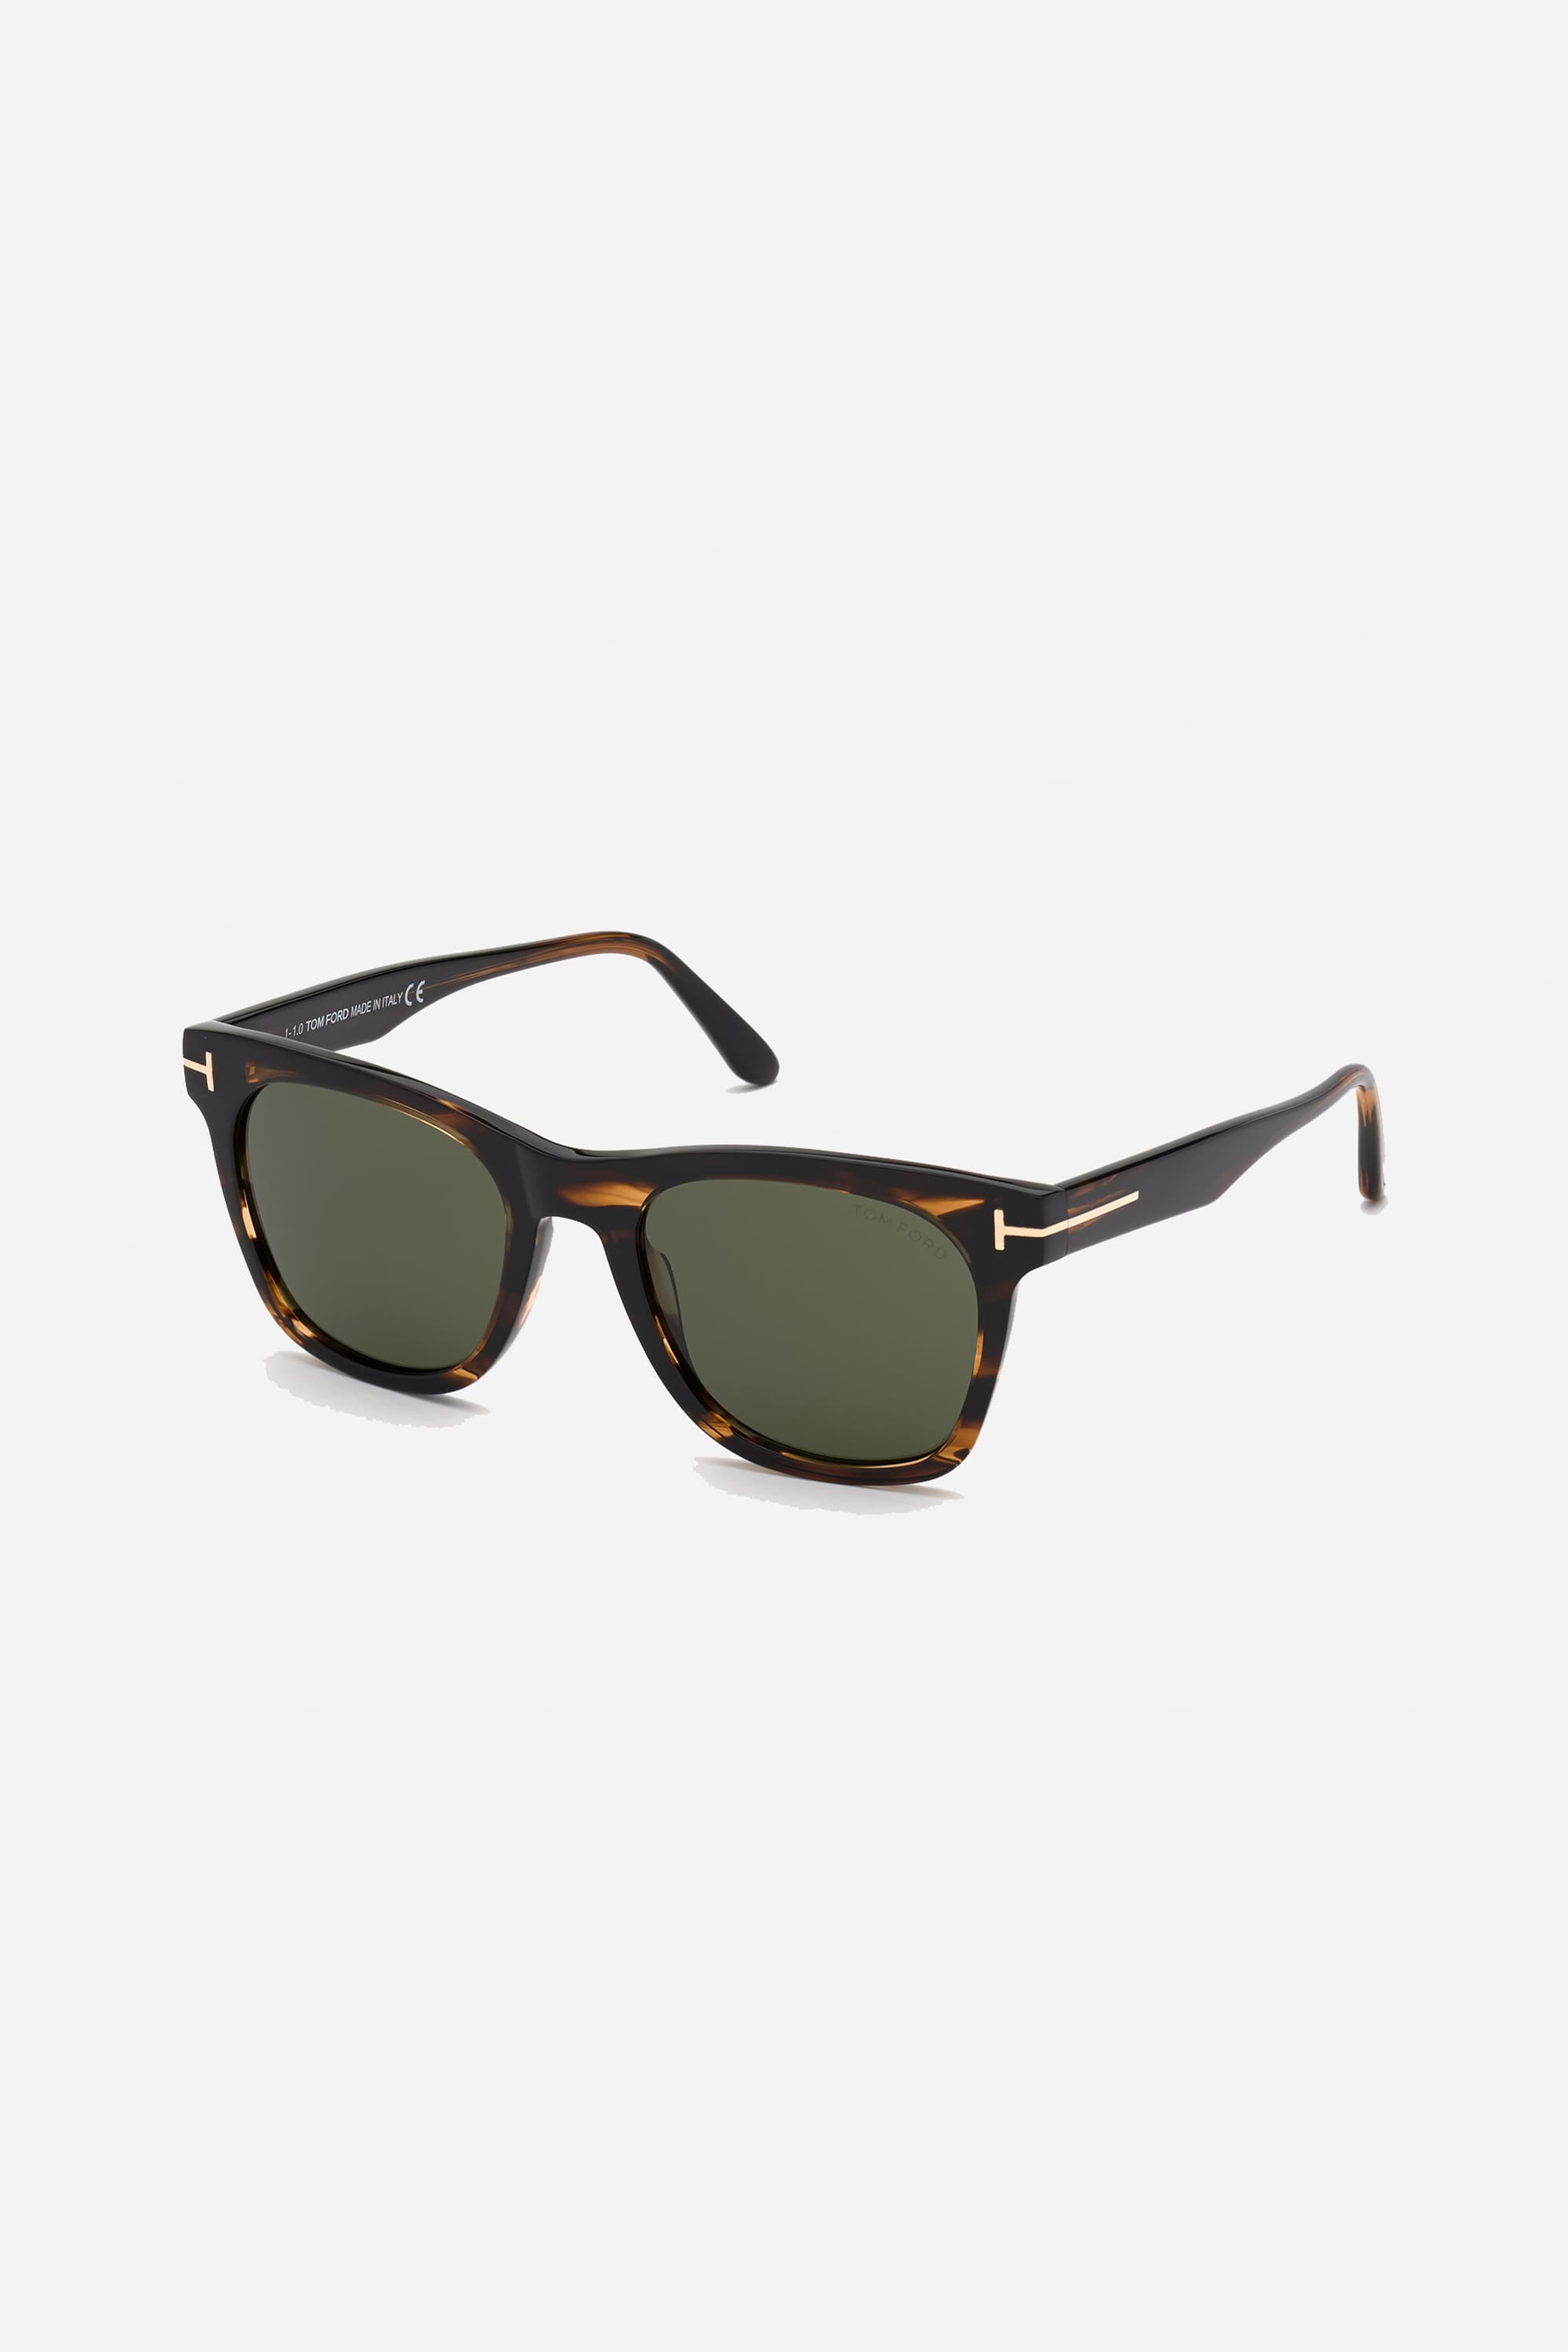 Tom Ford havana classic sunglasses - Eyewear Club